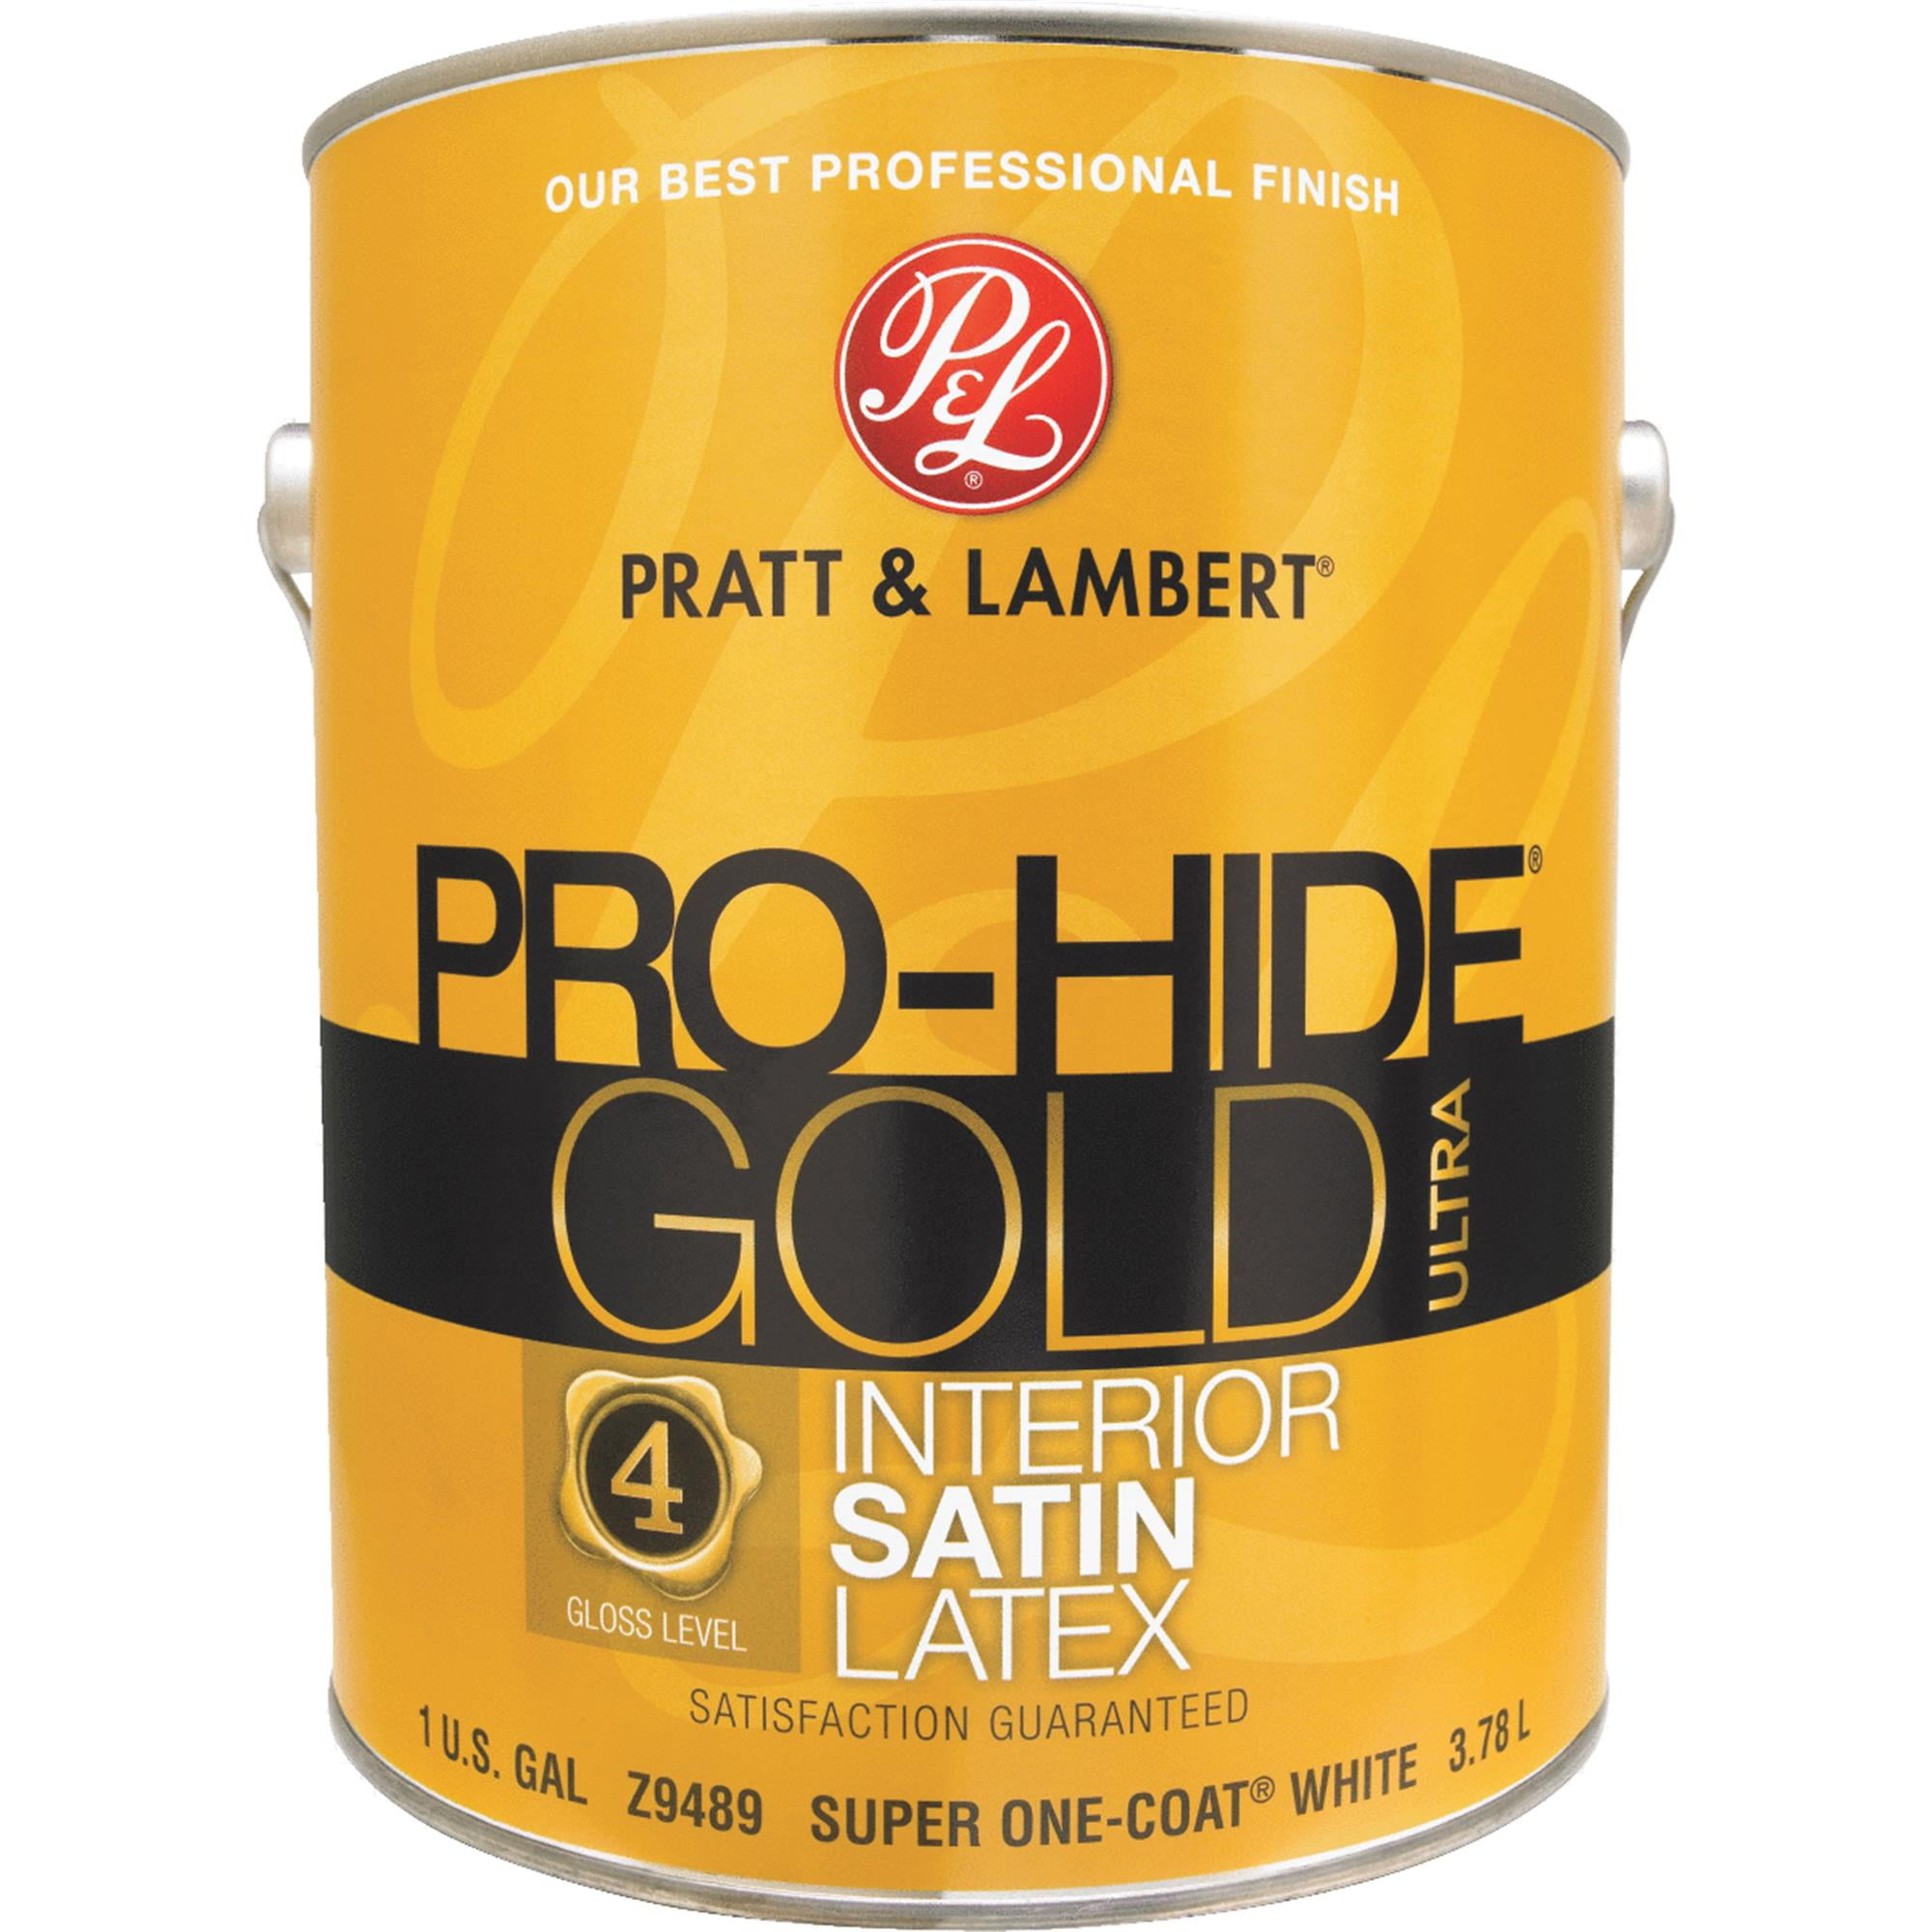 Pratt & Lambert Pro Hide Gold Ultra Latex Satin Interior Wall